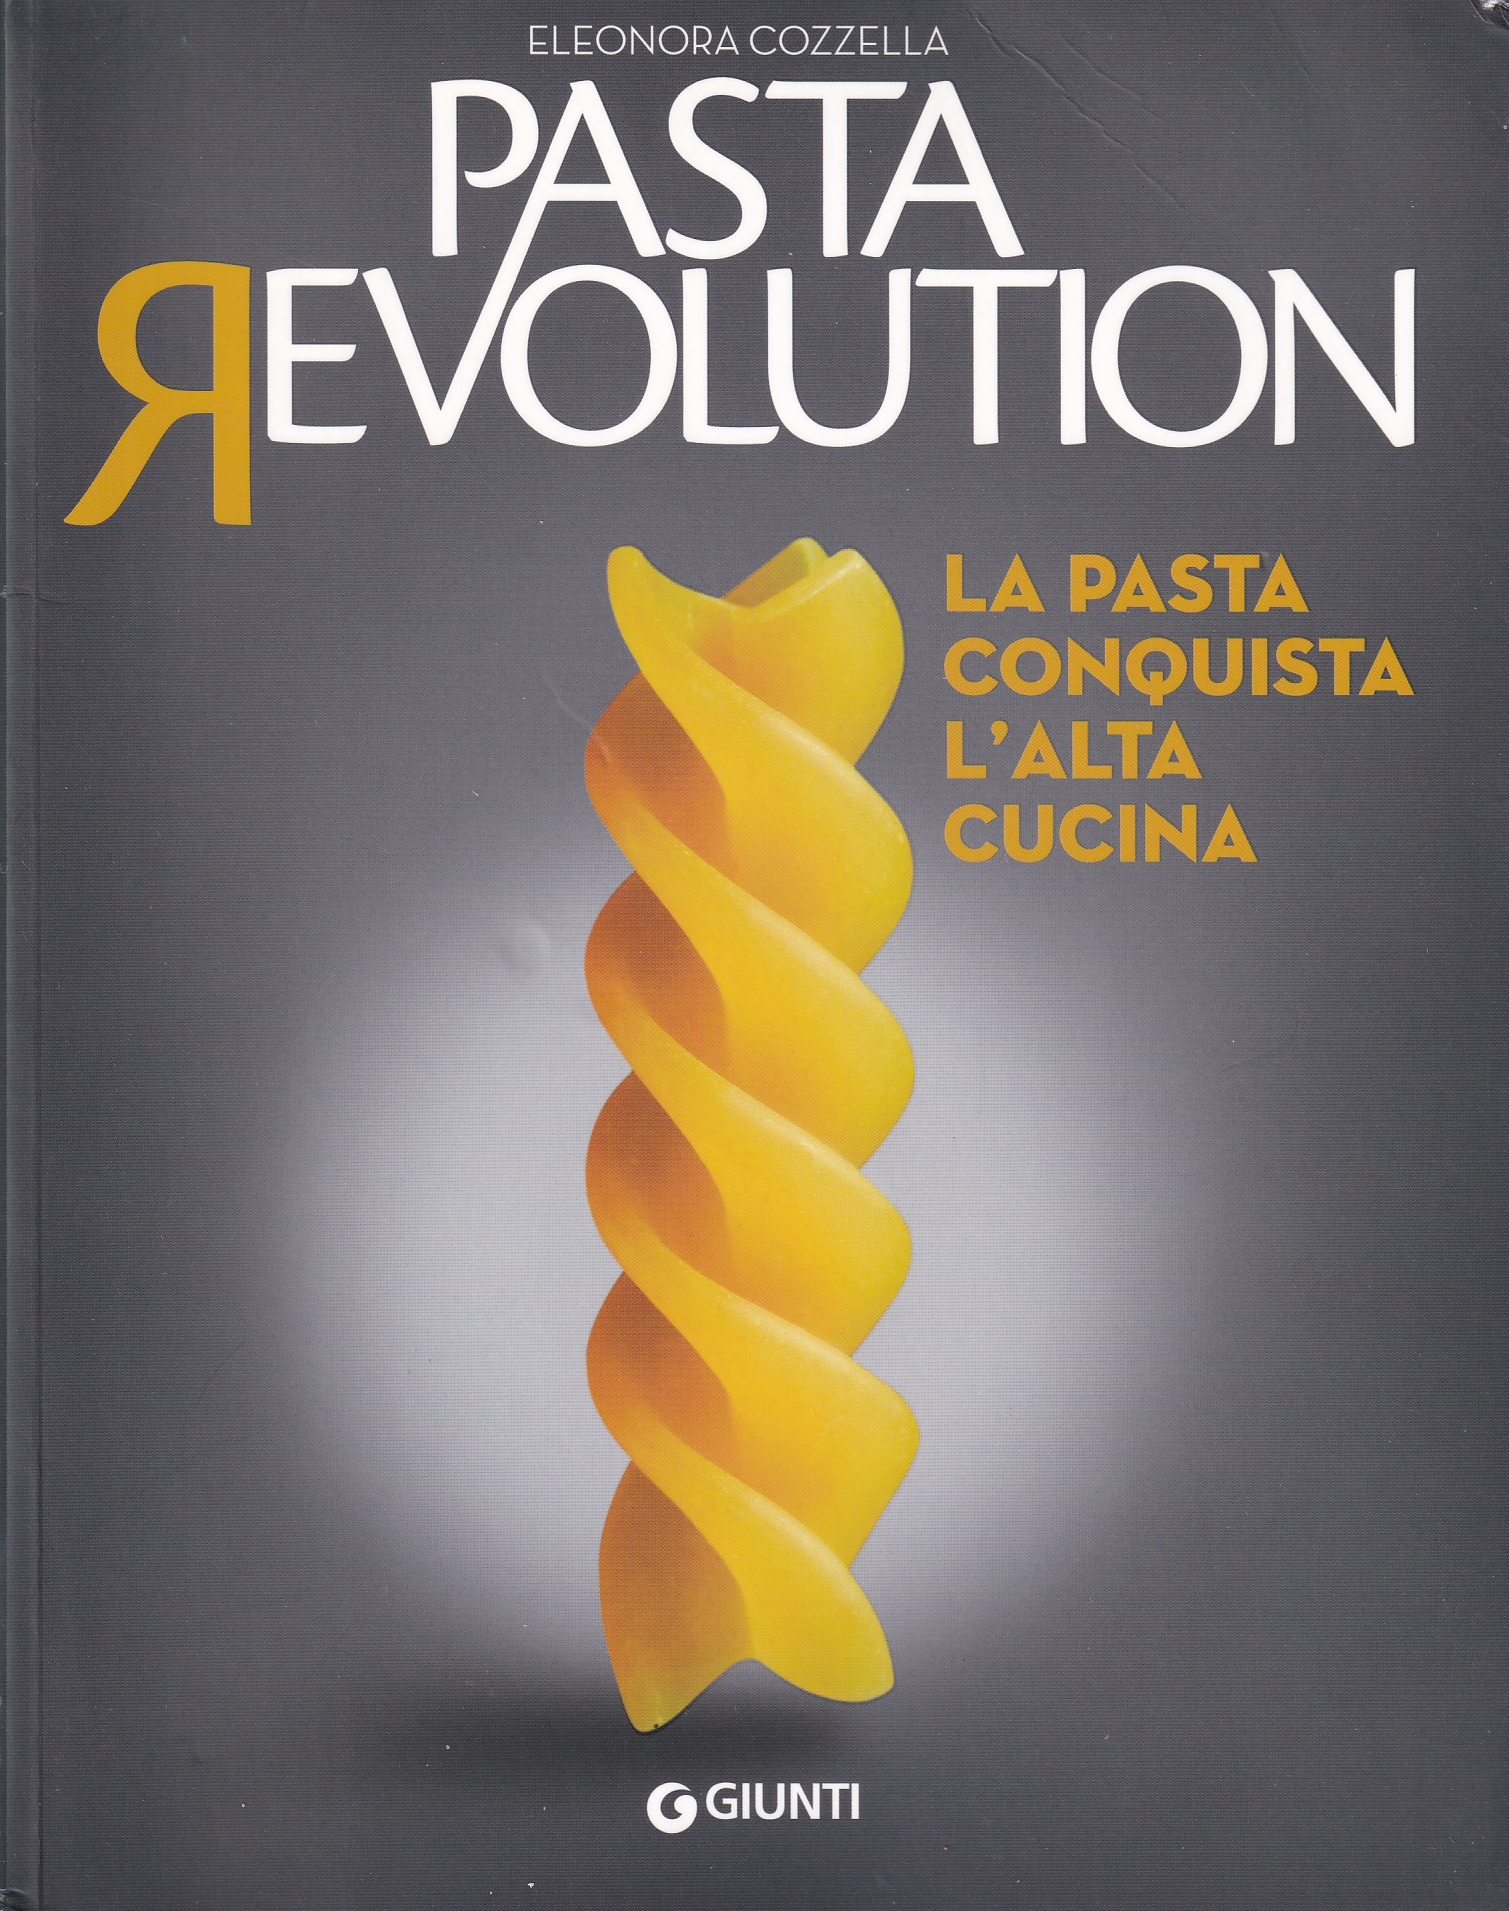 『pasta pastarevolution』